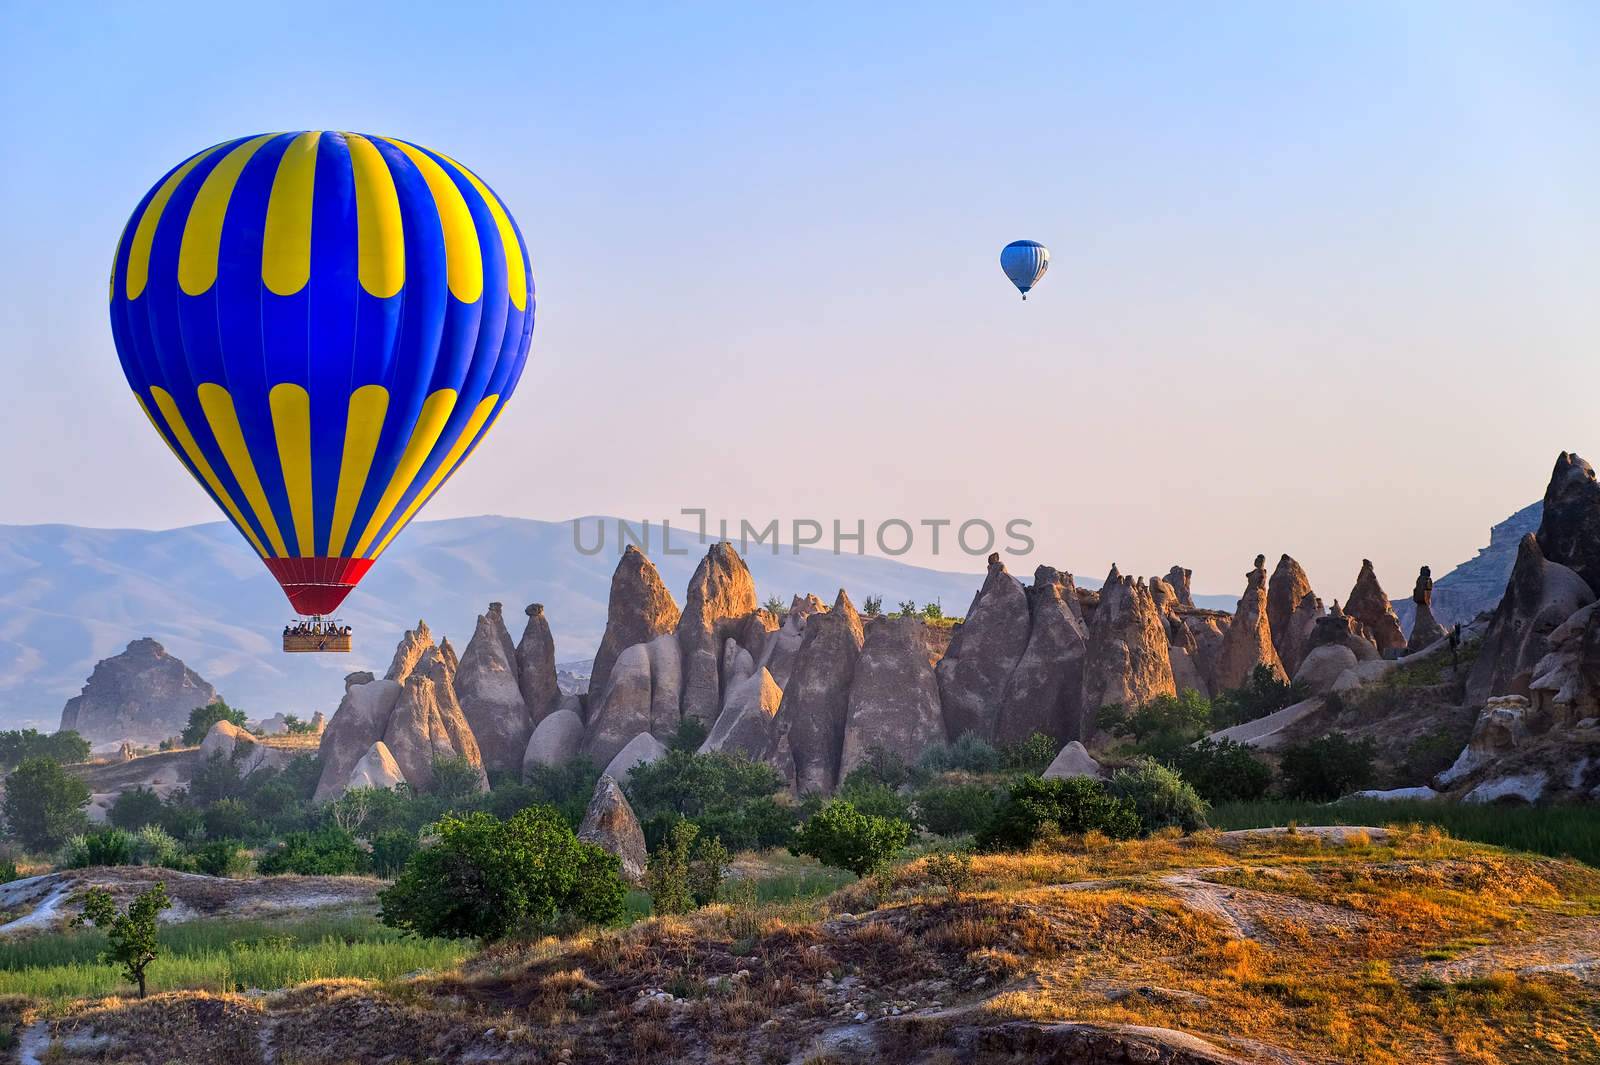 Cappadocia hot air balloon flying over bizarre rock landscape in by GlobePhotos